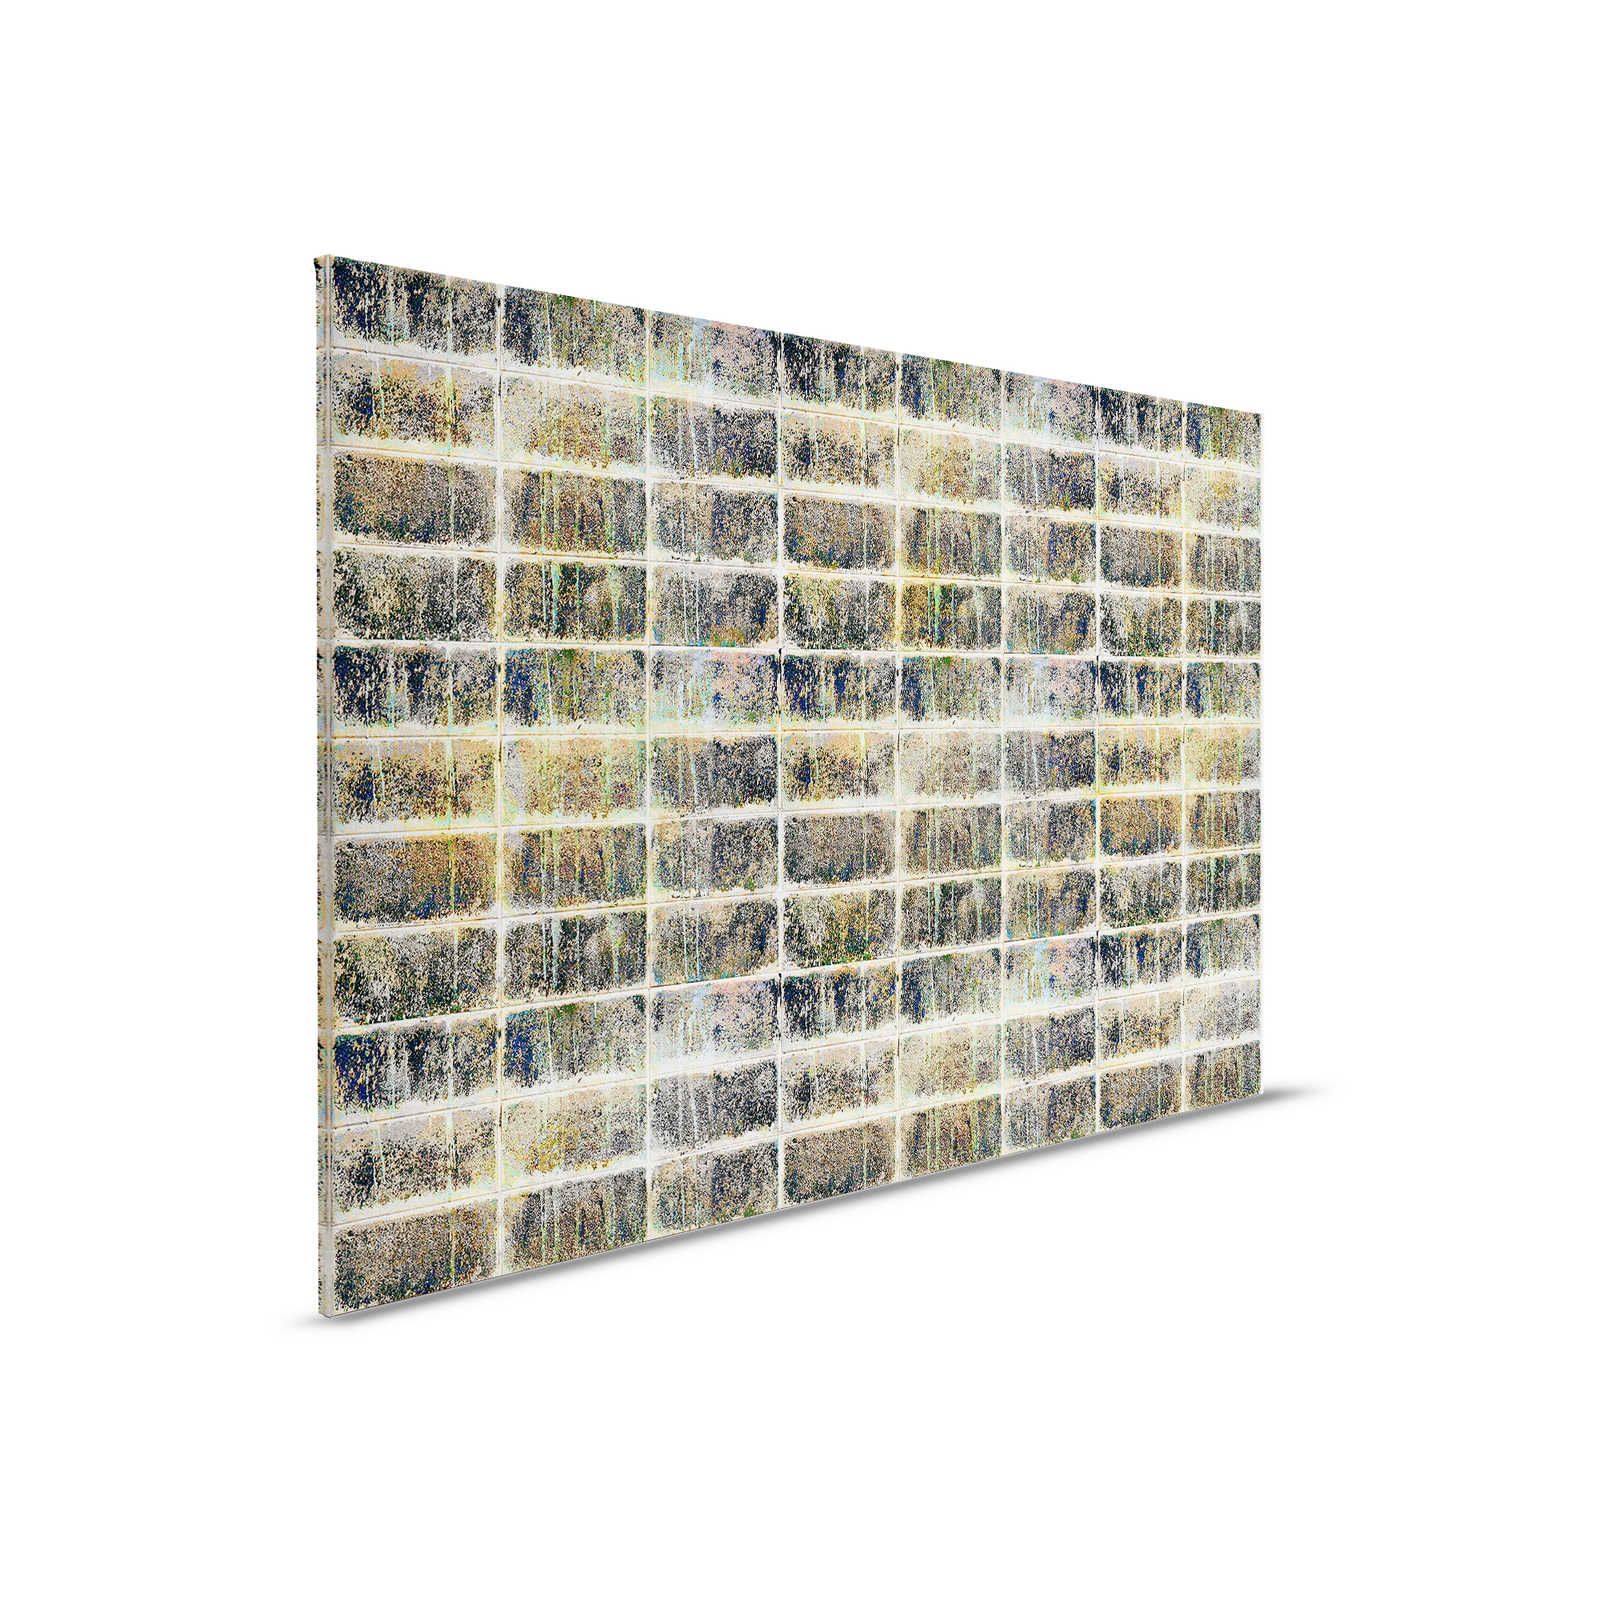         Factory 1 - Canvas painting Used Optics Tile Mirror Industrial Design - 0.90 m x 0.60 m
    